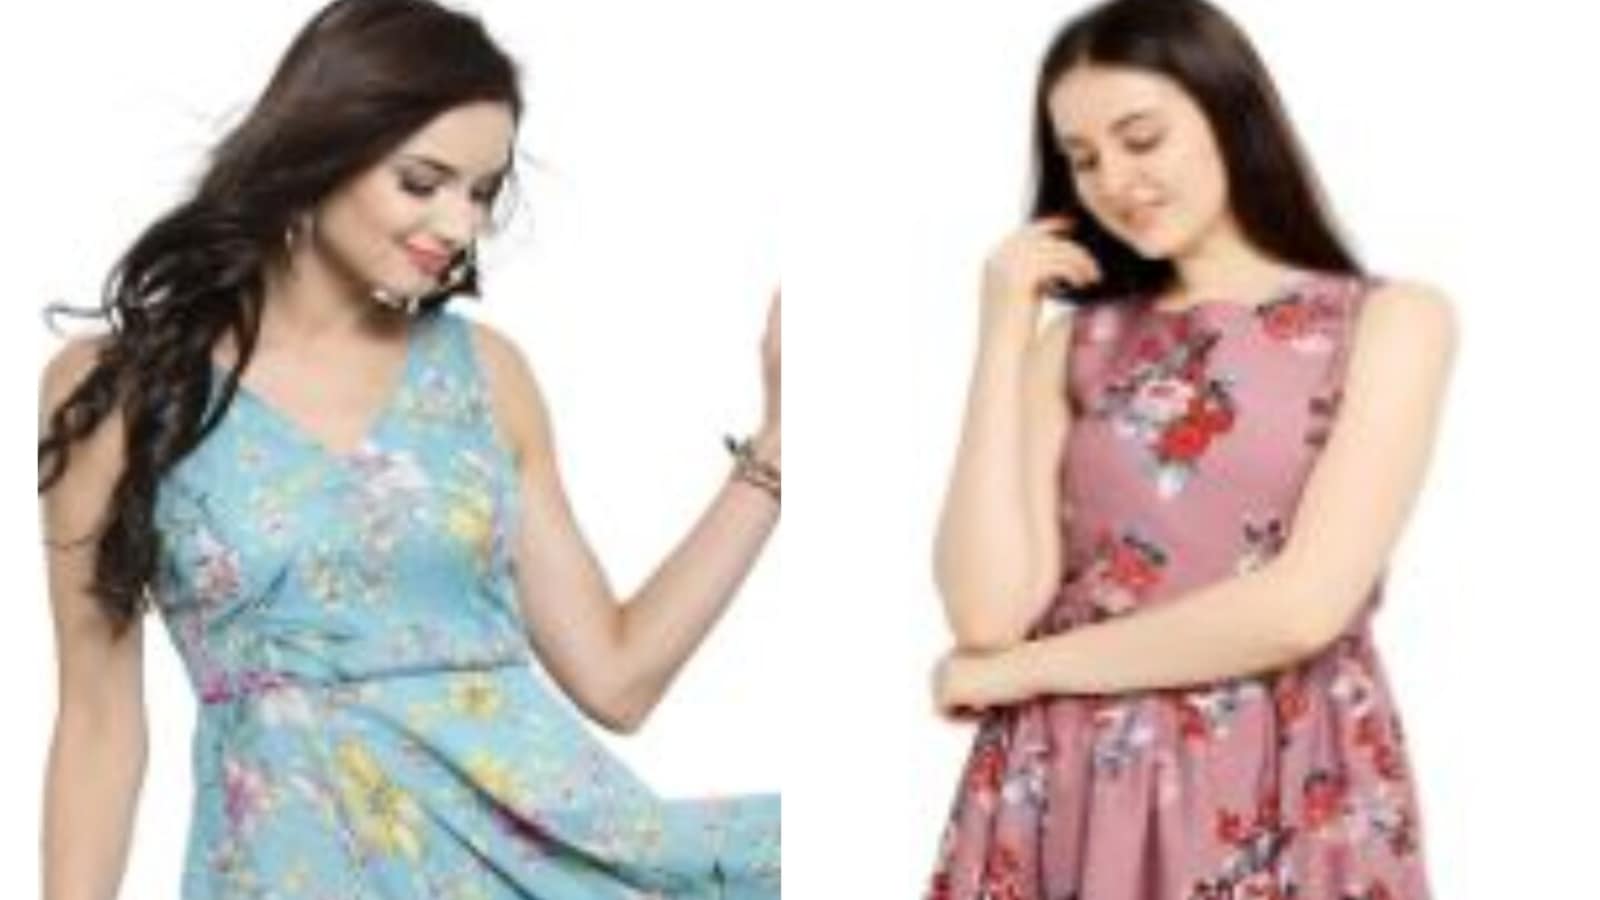 Stylish Ravishing Women Dress Girls dresses top 11 maxi party 1516 years  gown one piece